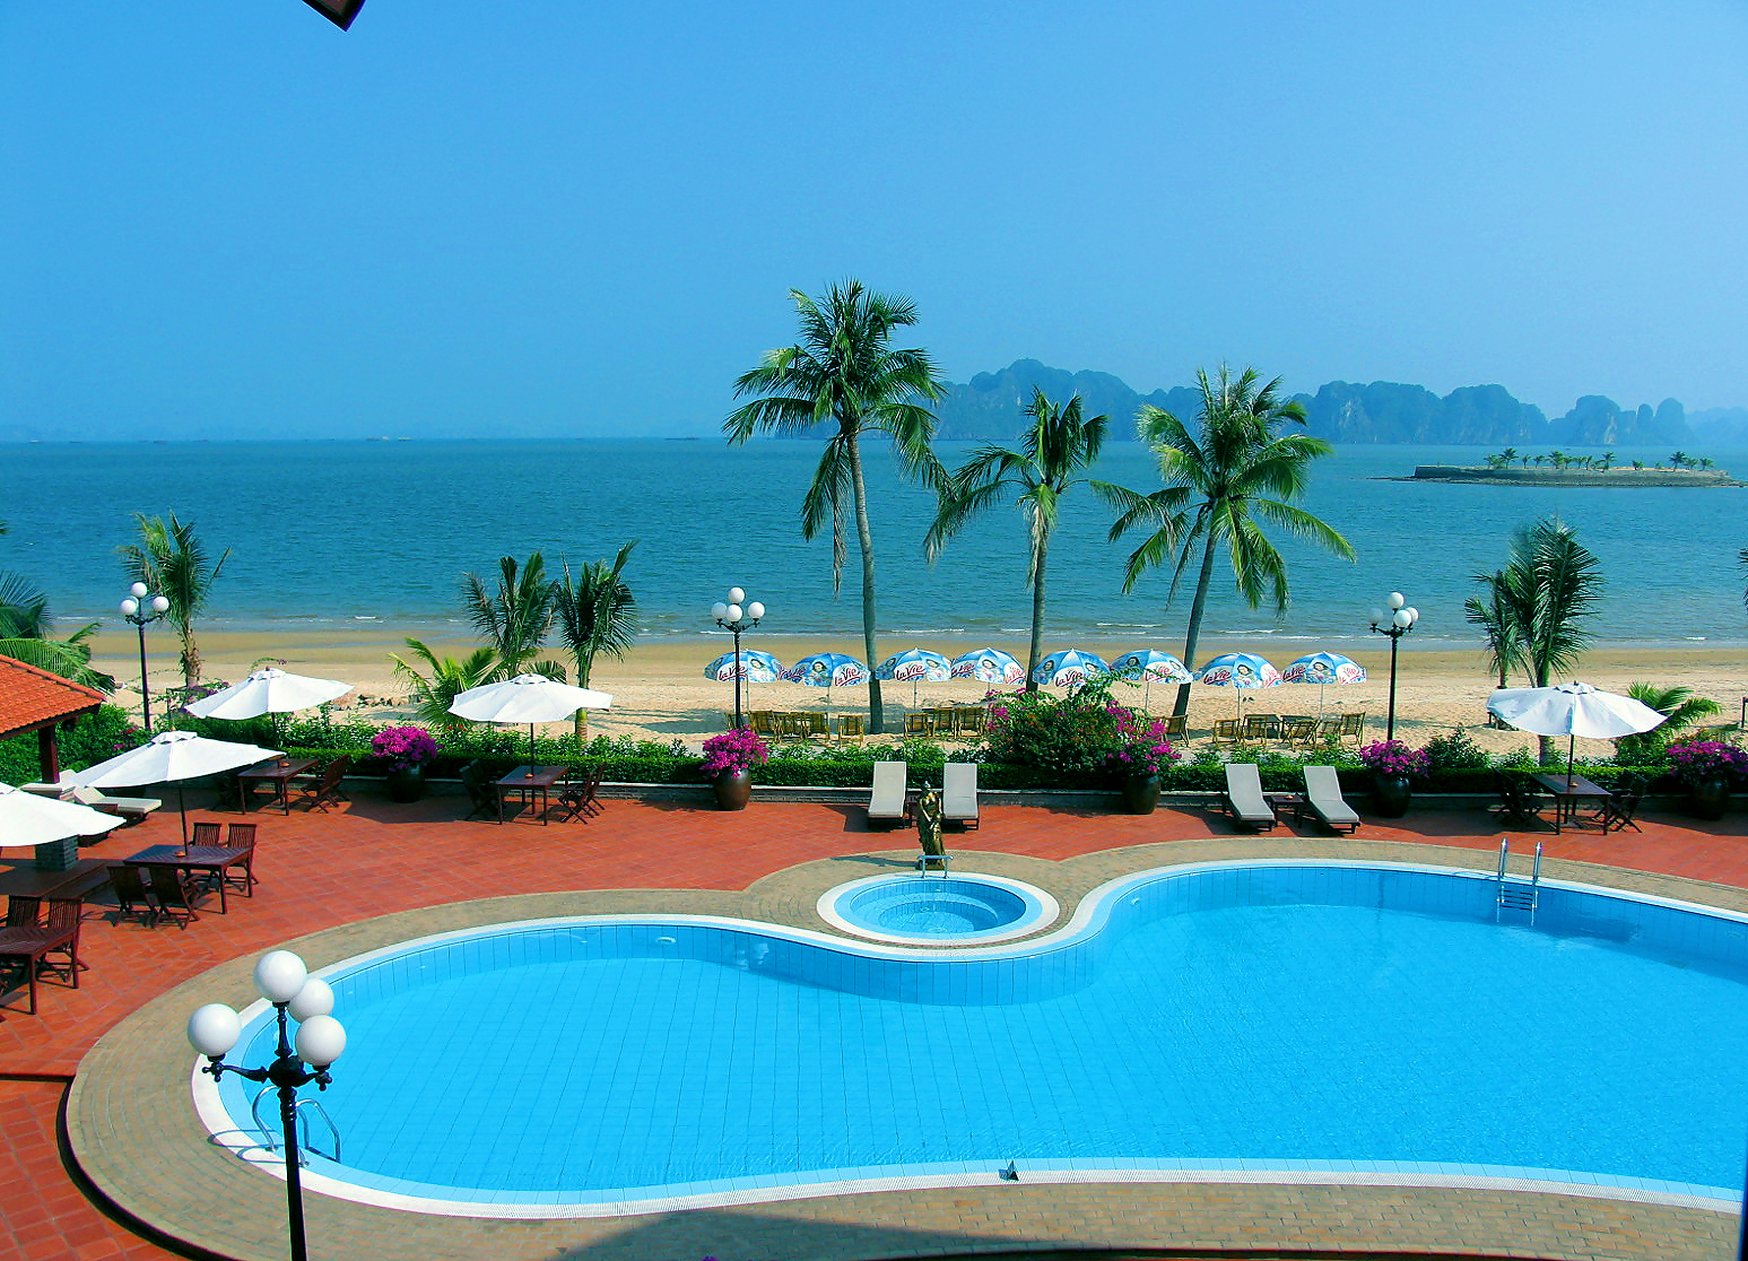 Tuan Chau Resort beach的照片 具有非常干净级别的清洁度